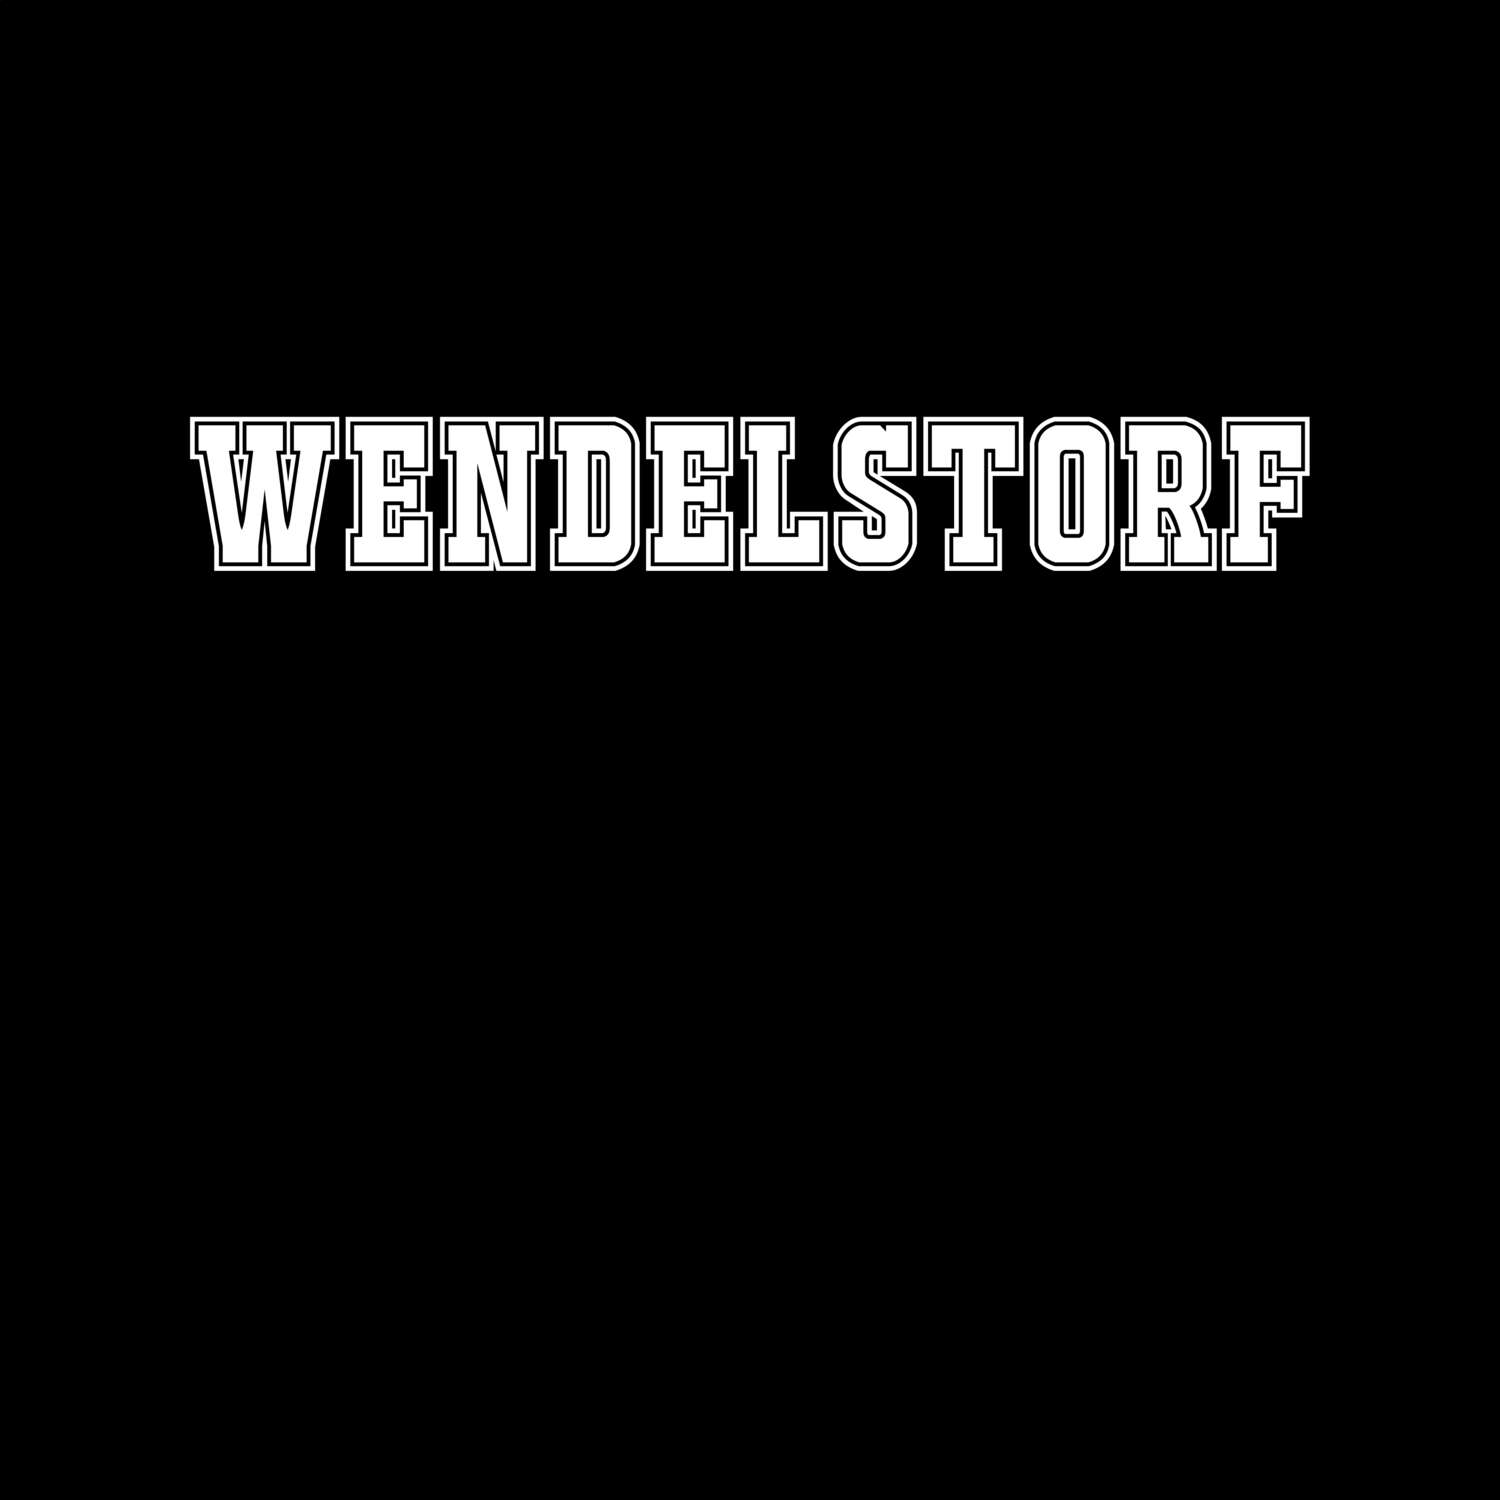 Wendelstorf T-Shirt »Classic«